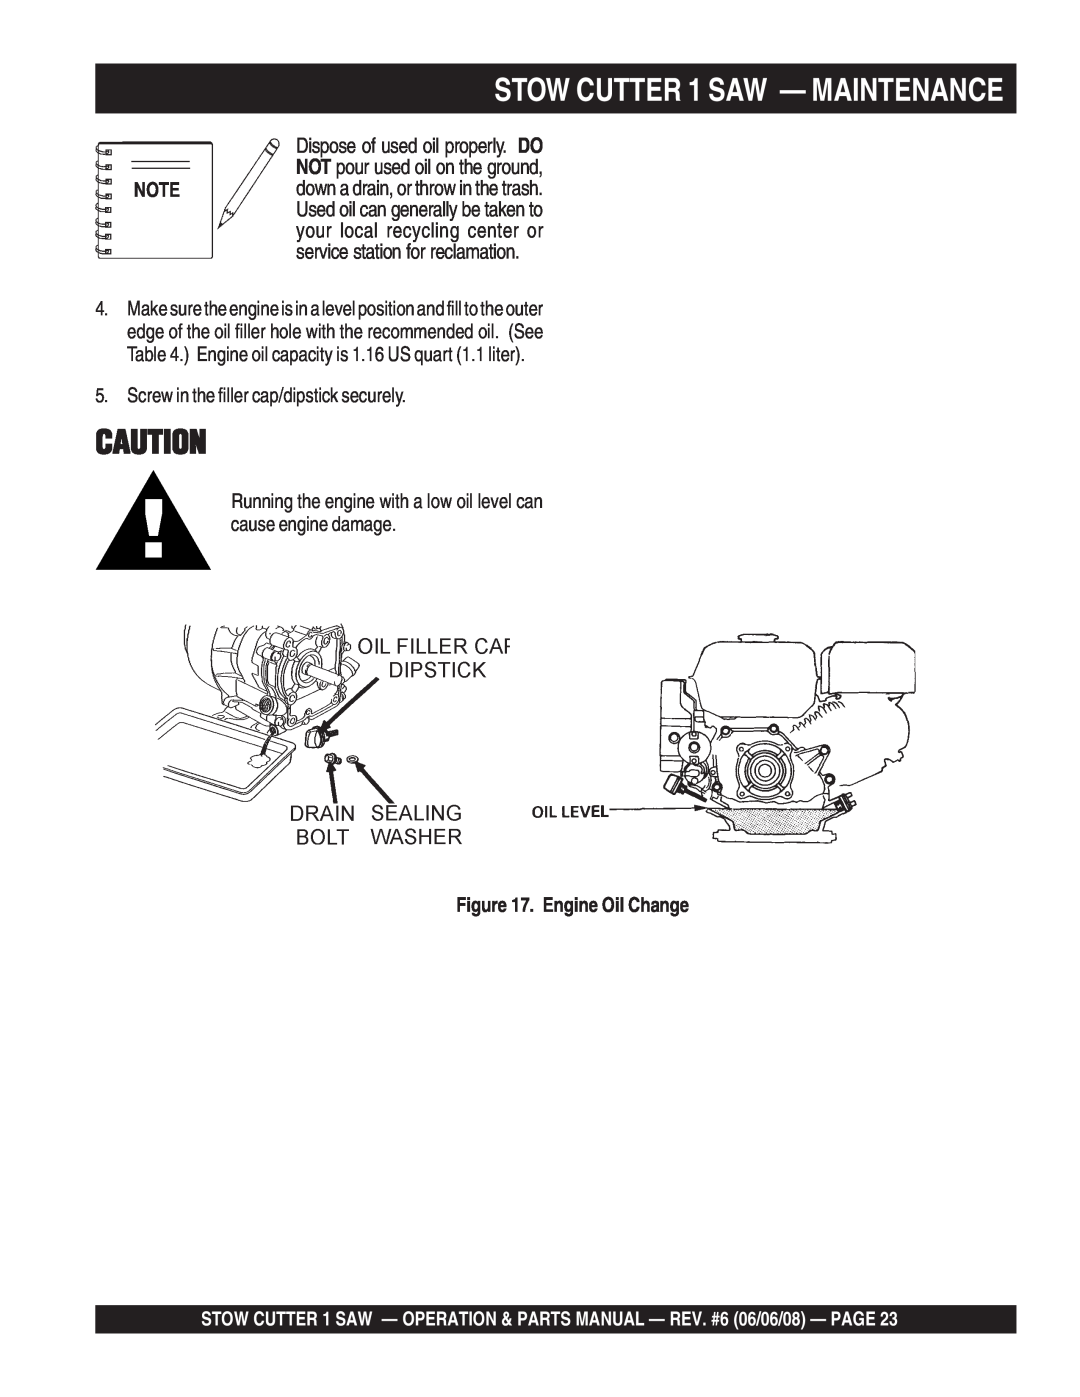 Multiquip CD613H18 (Honda GX390 Gasoline Engine) manual STOW CUTTER 1 SAW - MAINTENANCE, Engine Oil Change 